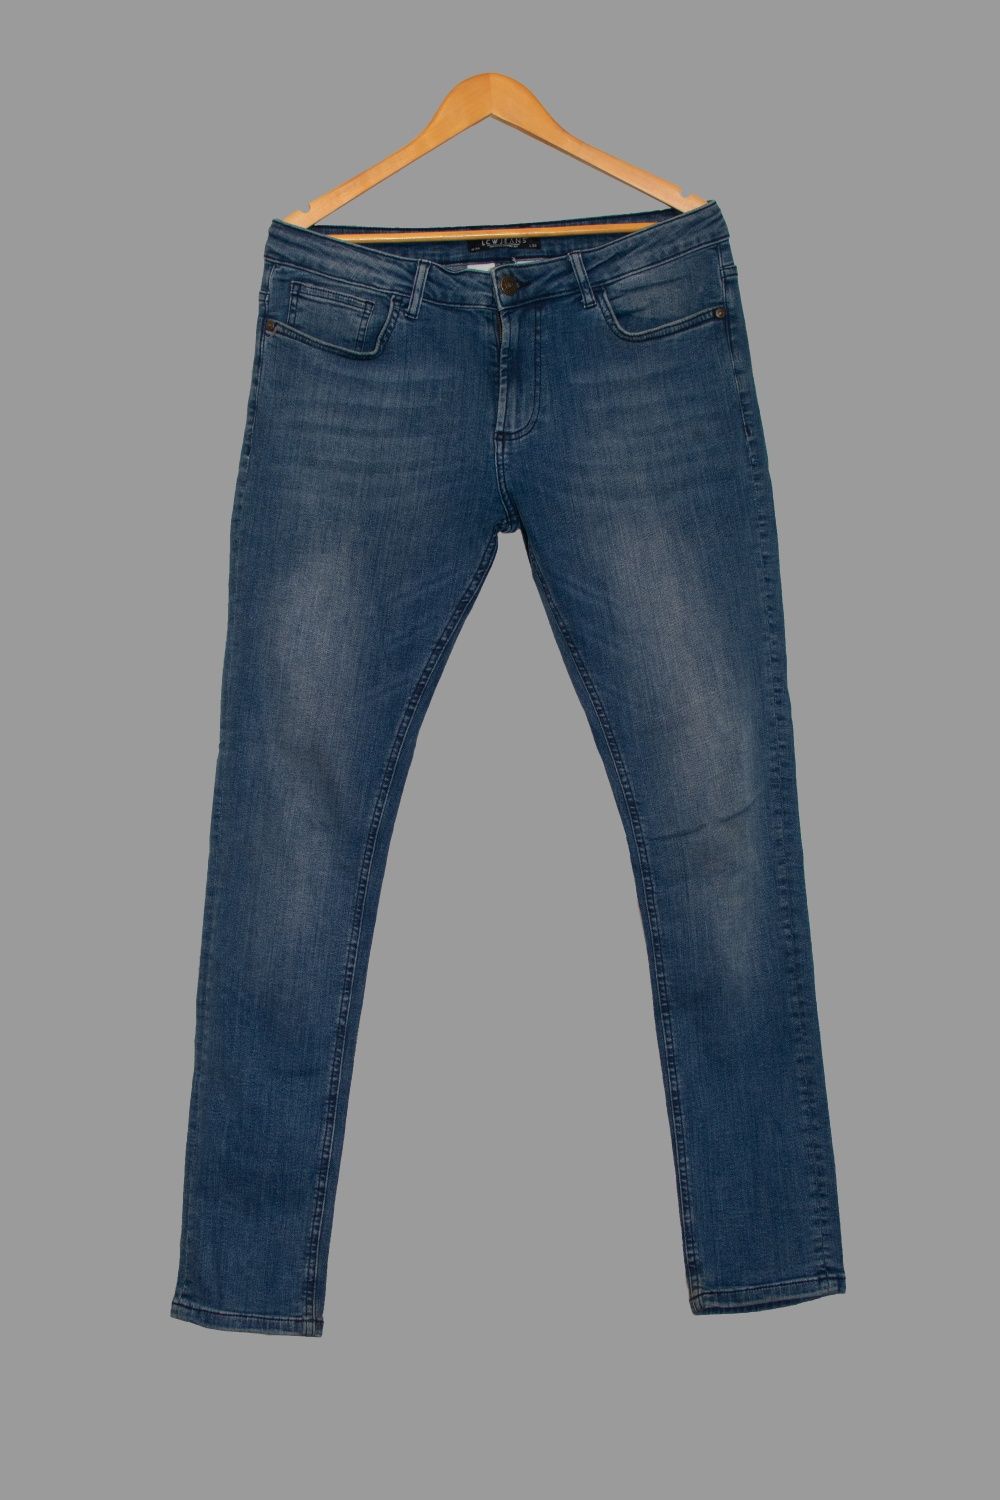 LC waikiki джинсы мужские super skinny fit